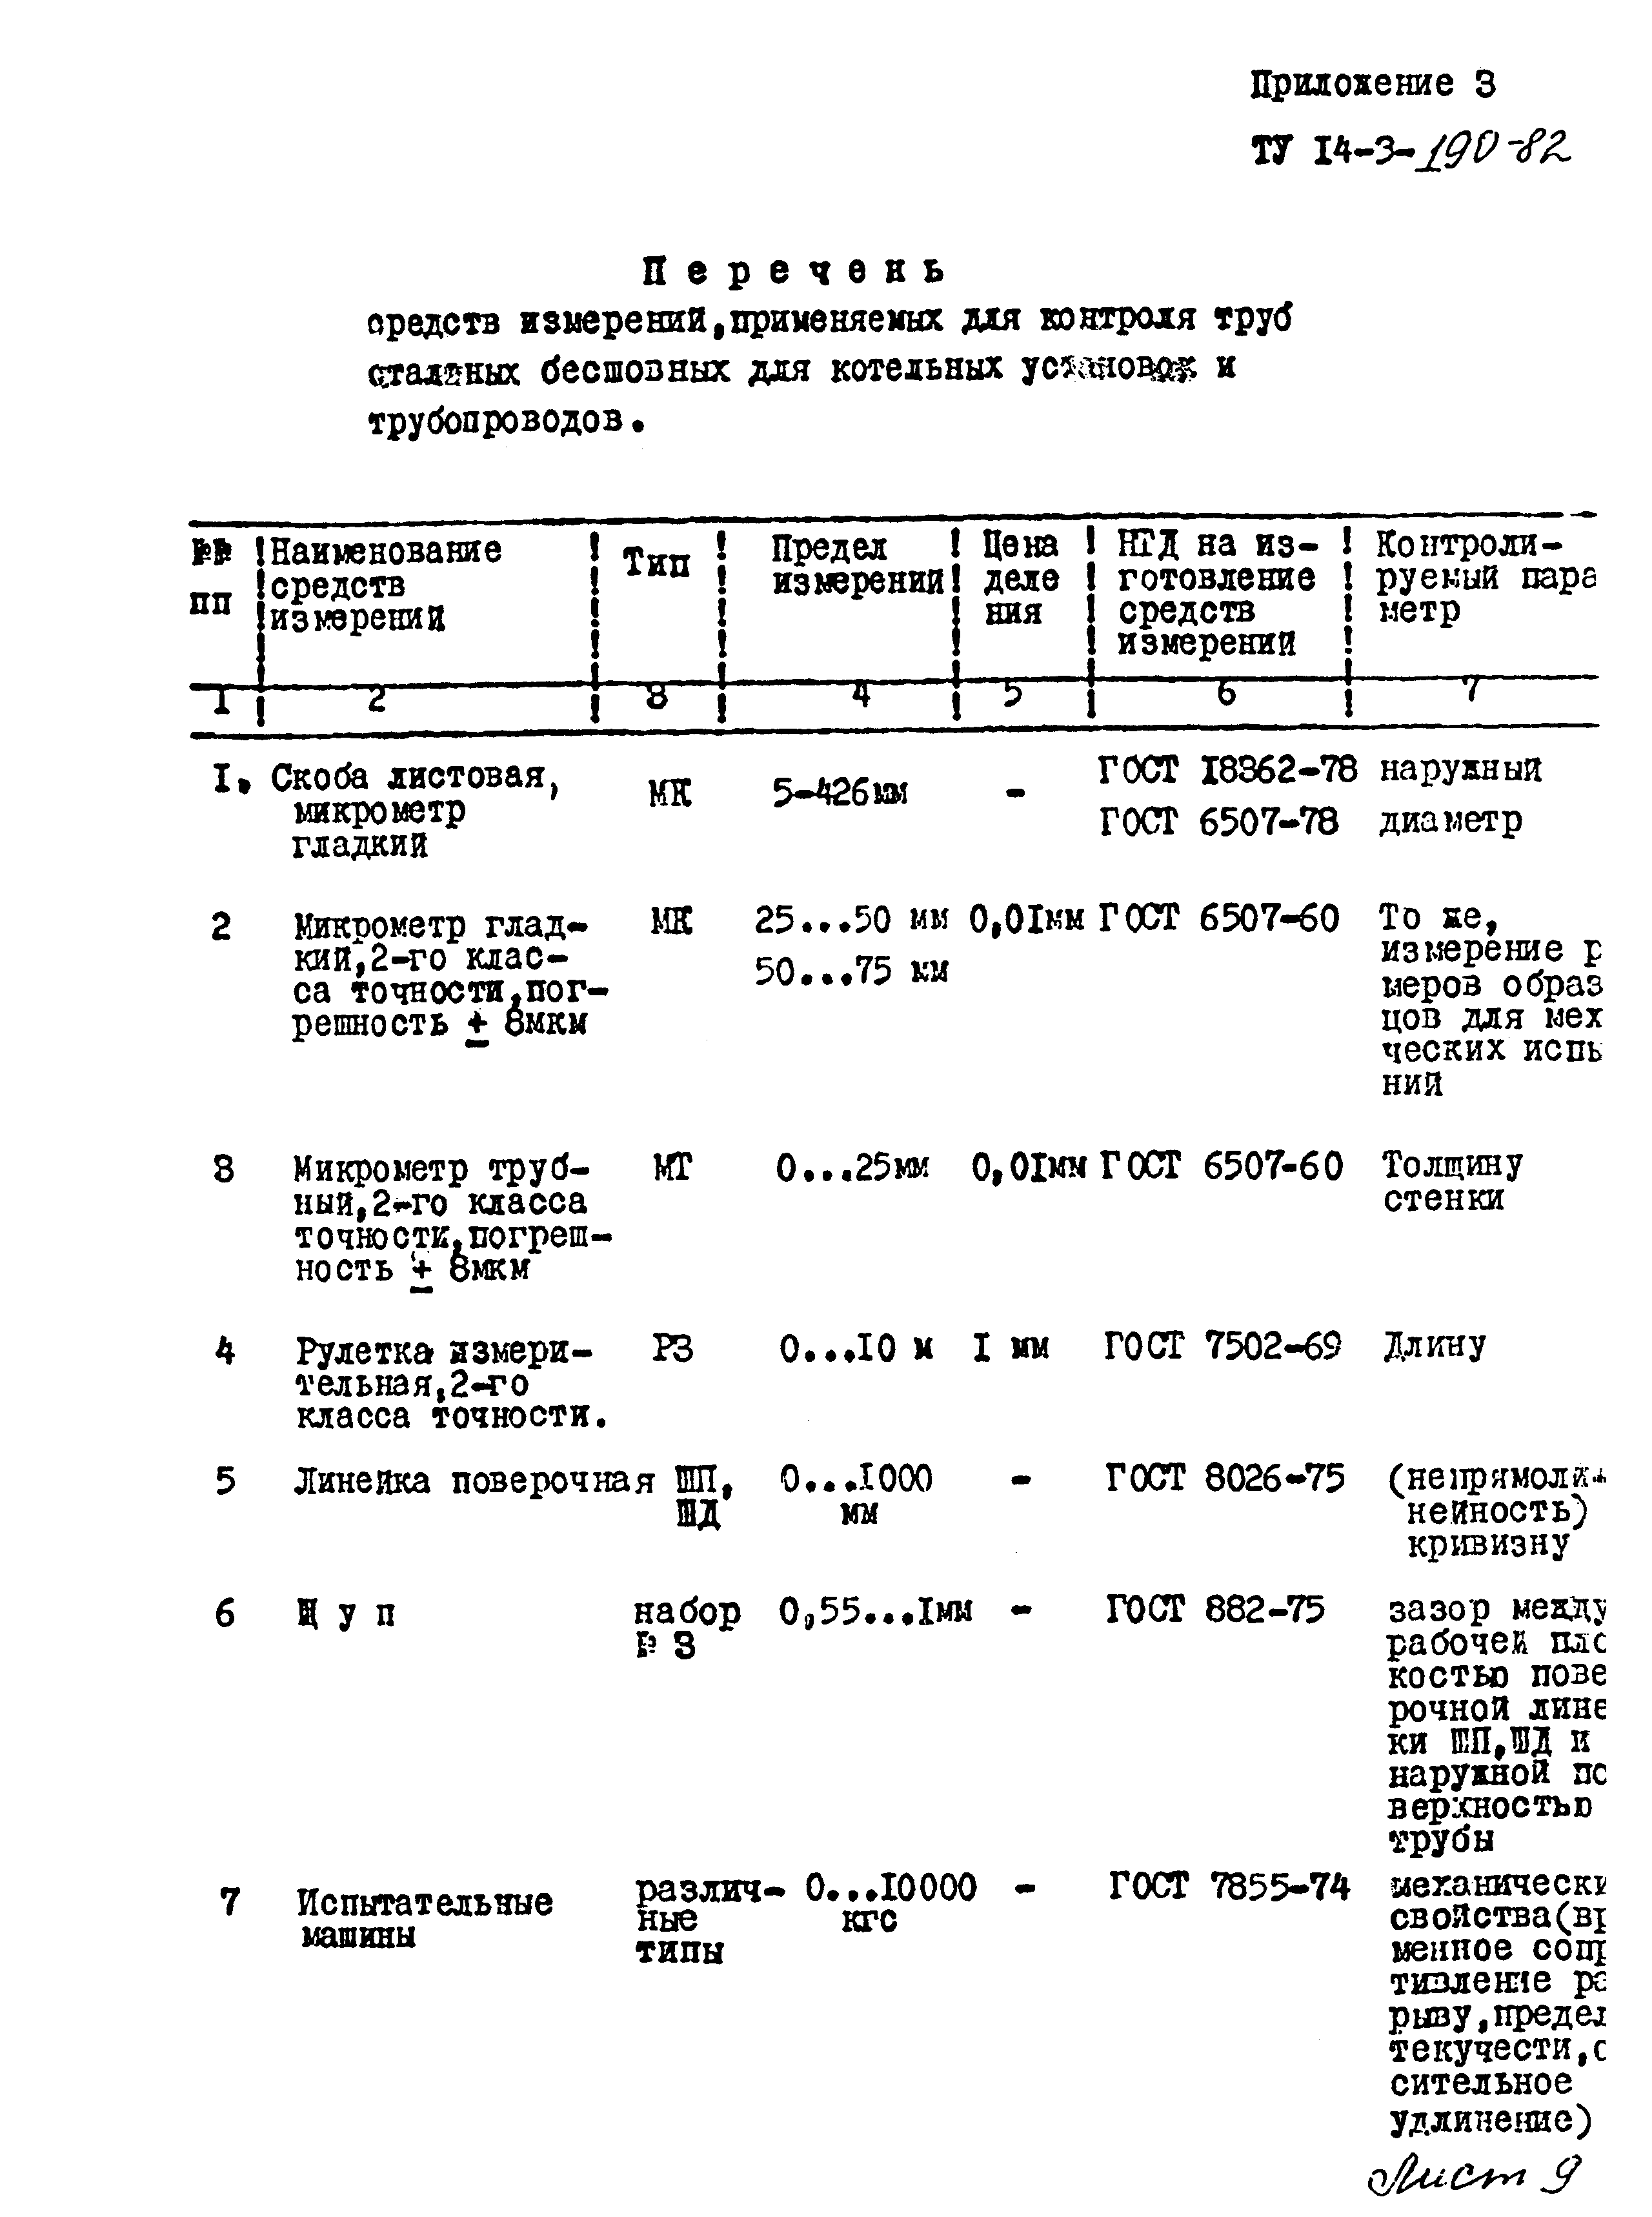 ТУ 14-3-190-82